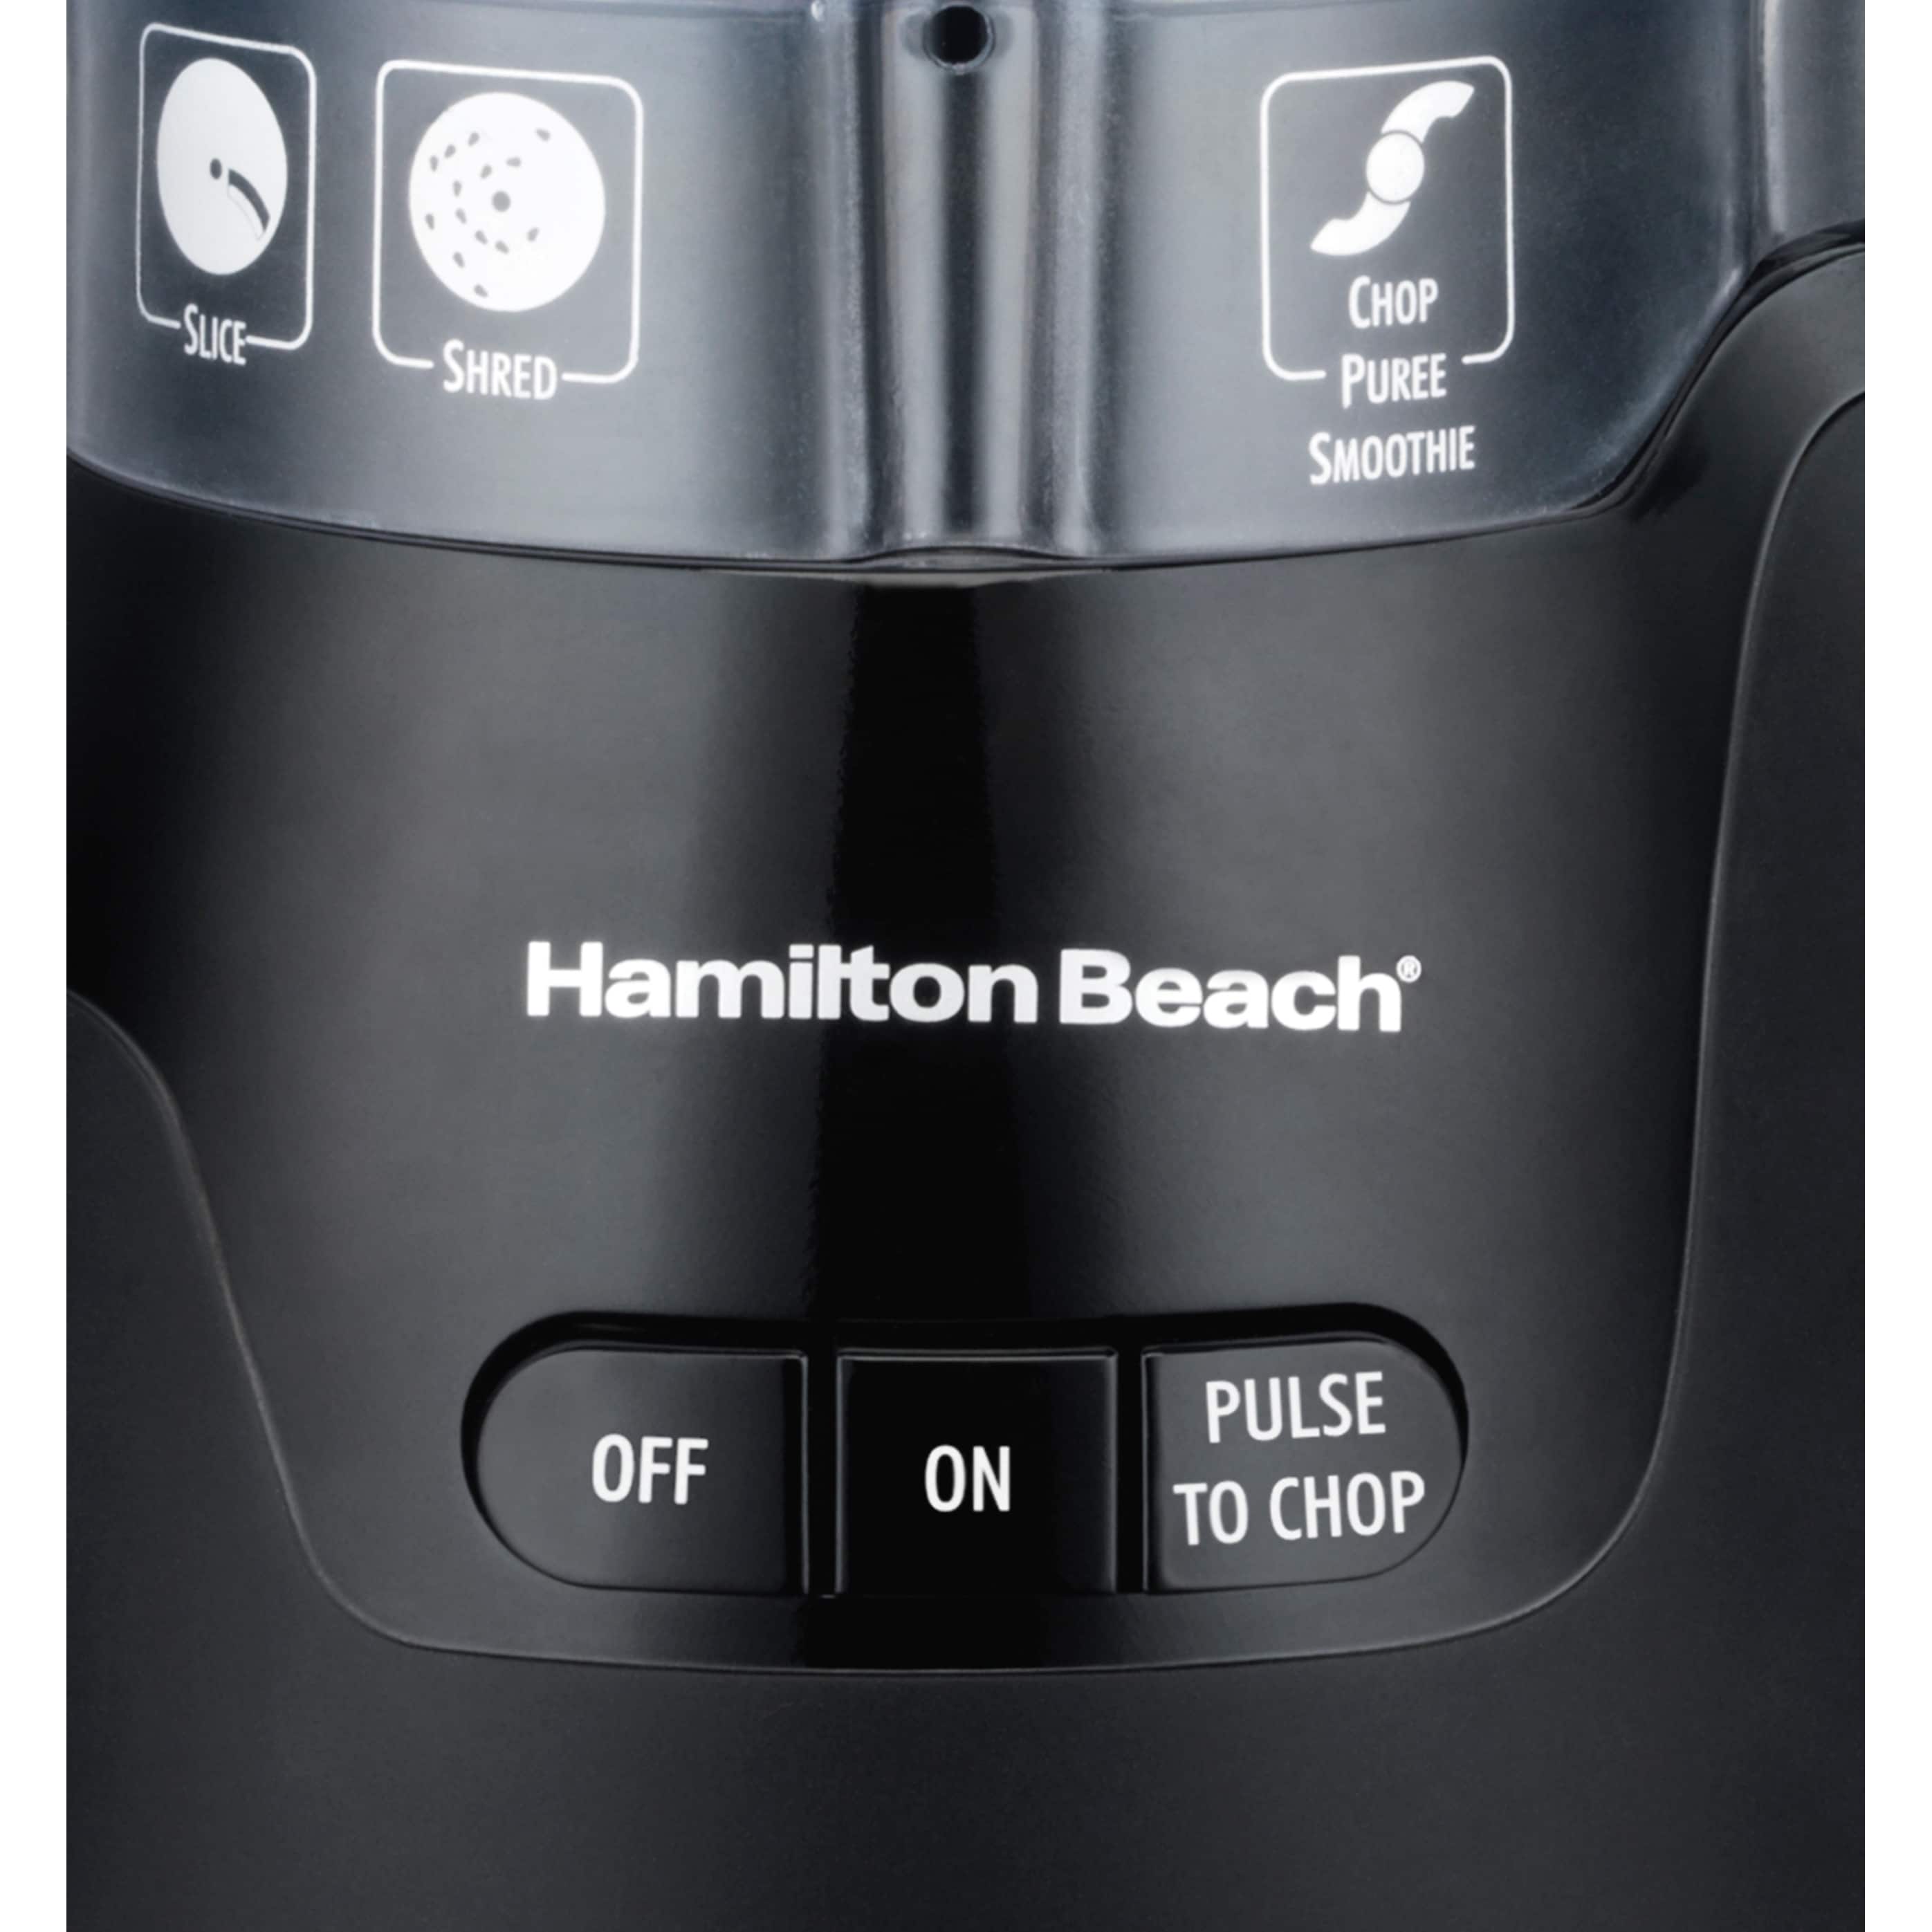 https://ak1.ostkcdn.com/images/products/30979543/Hamilton-Beach-Stack-Snap-4-Cup-Compact-Food-Processor-1506d0ae-b5bd-4e4f-9072-d5056f6b4582.jpg